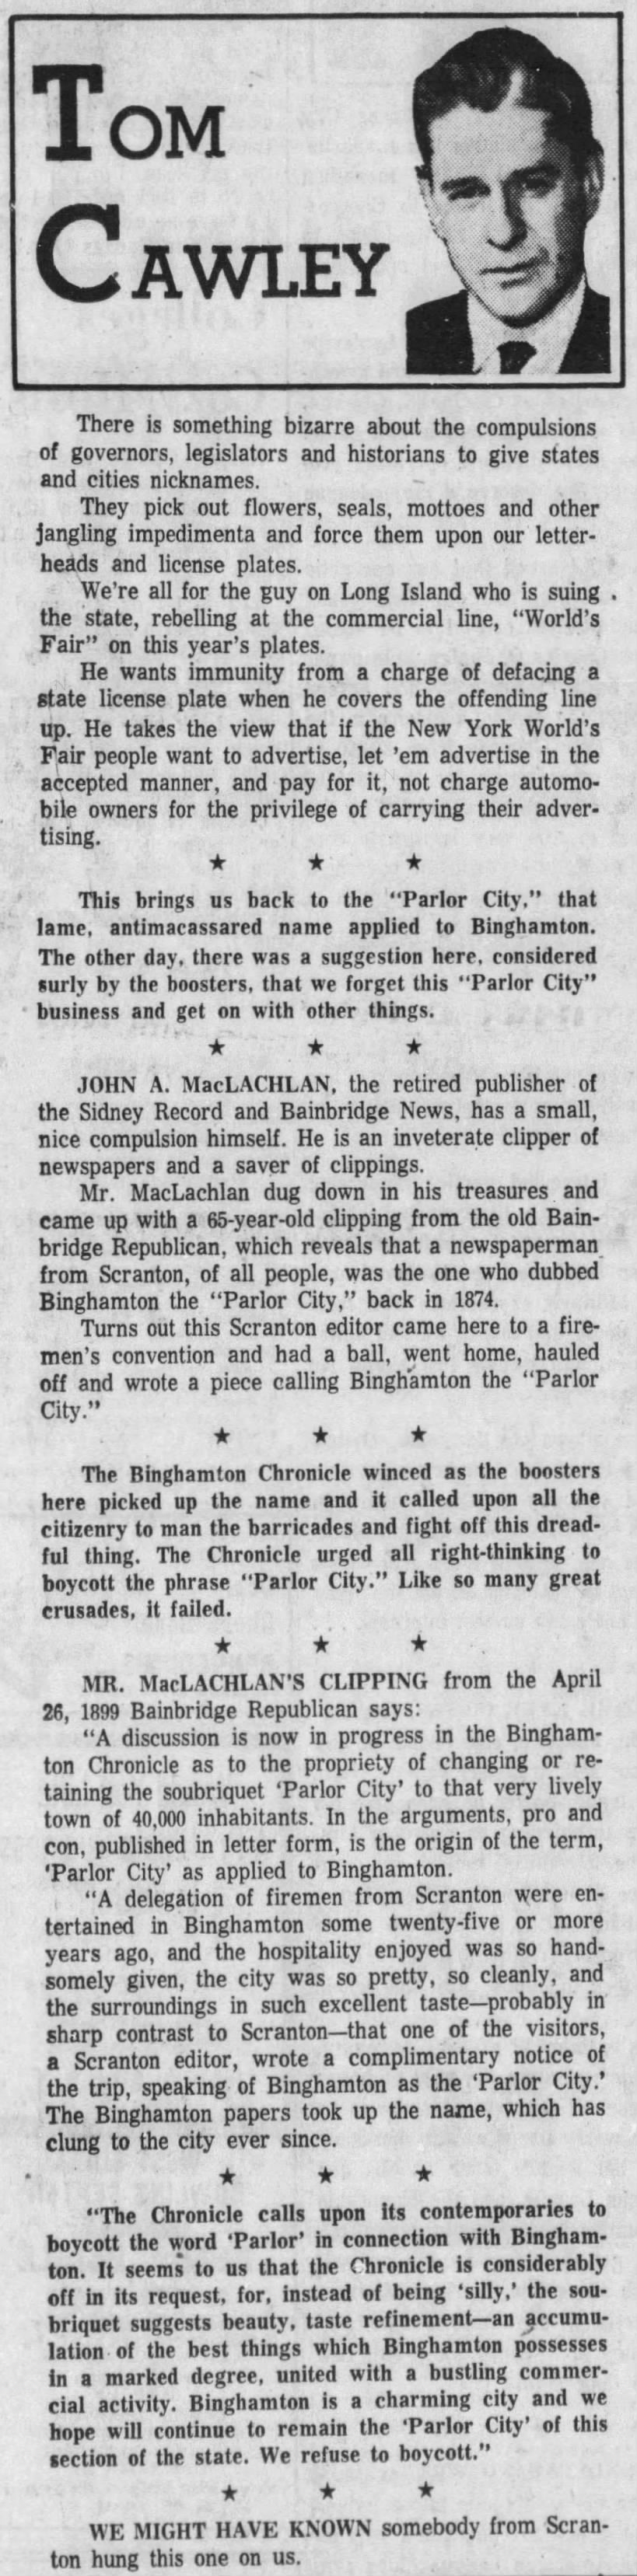 Binghamton's "Parlor City" nickname explained (1964).